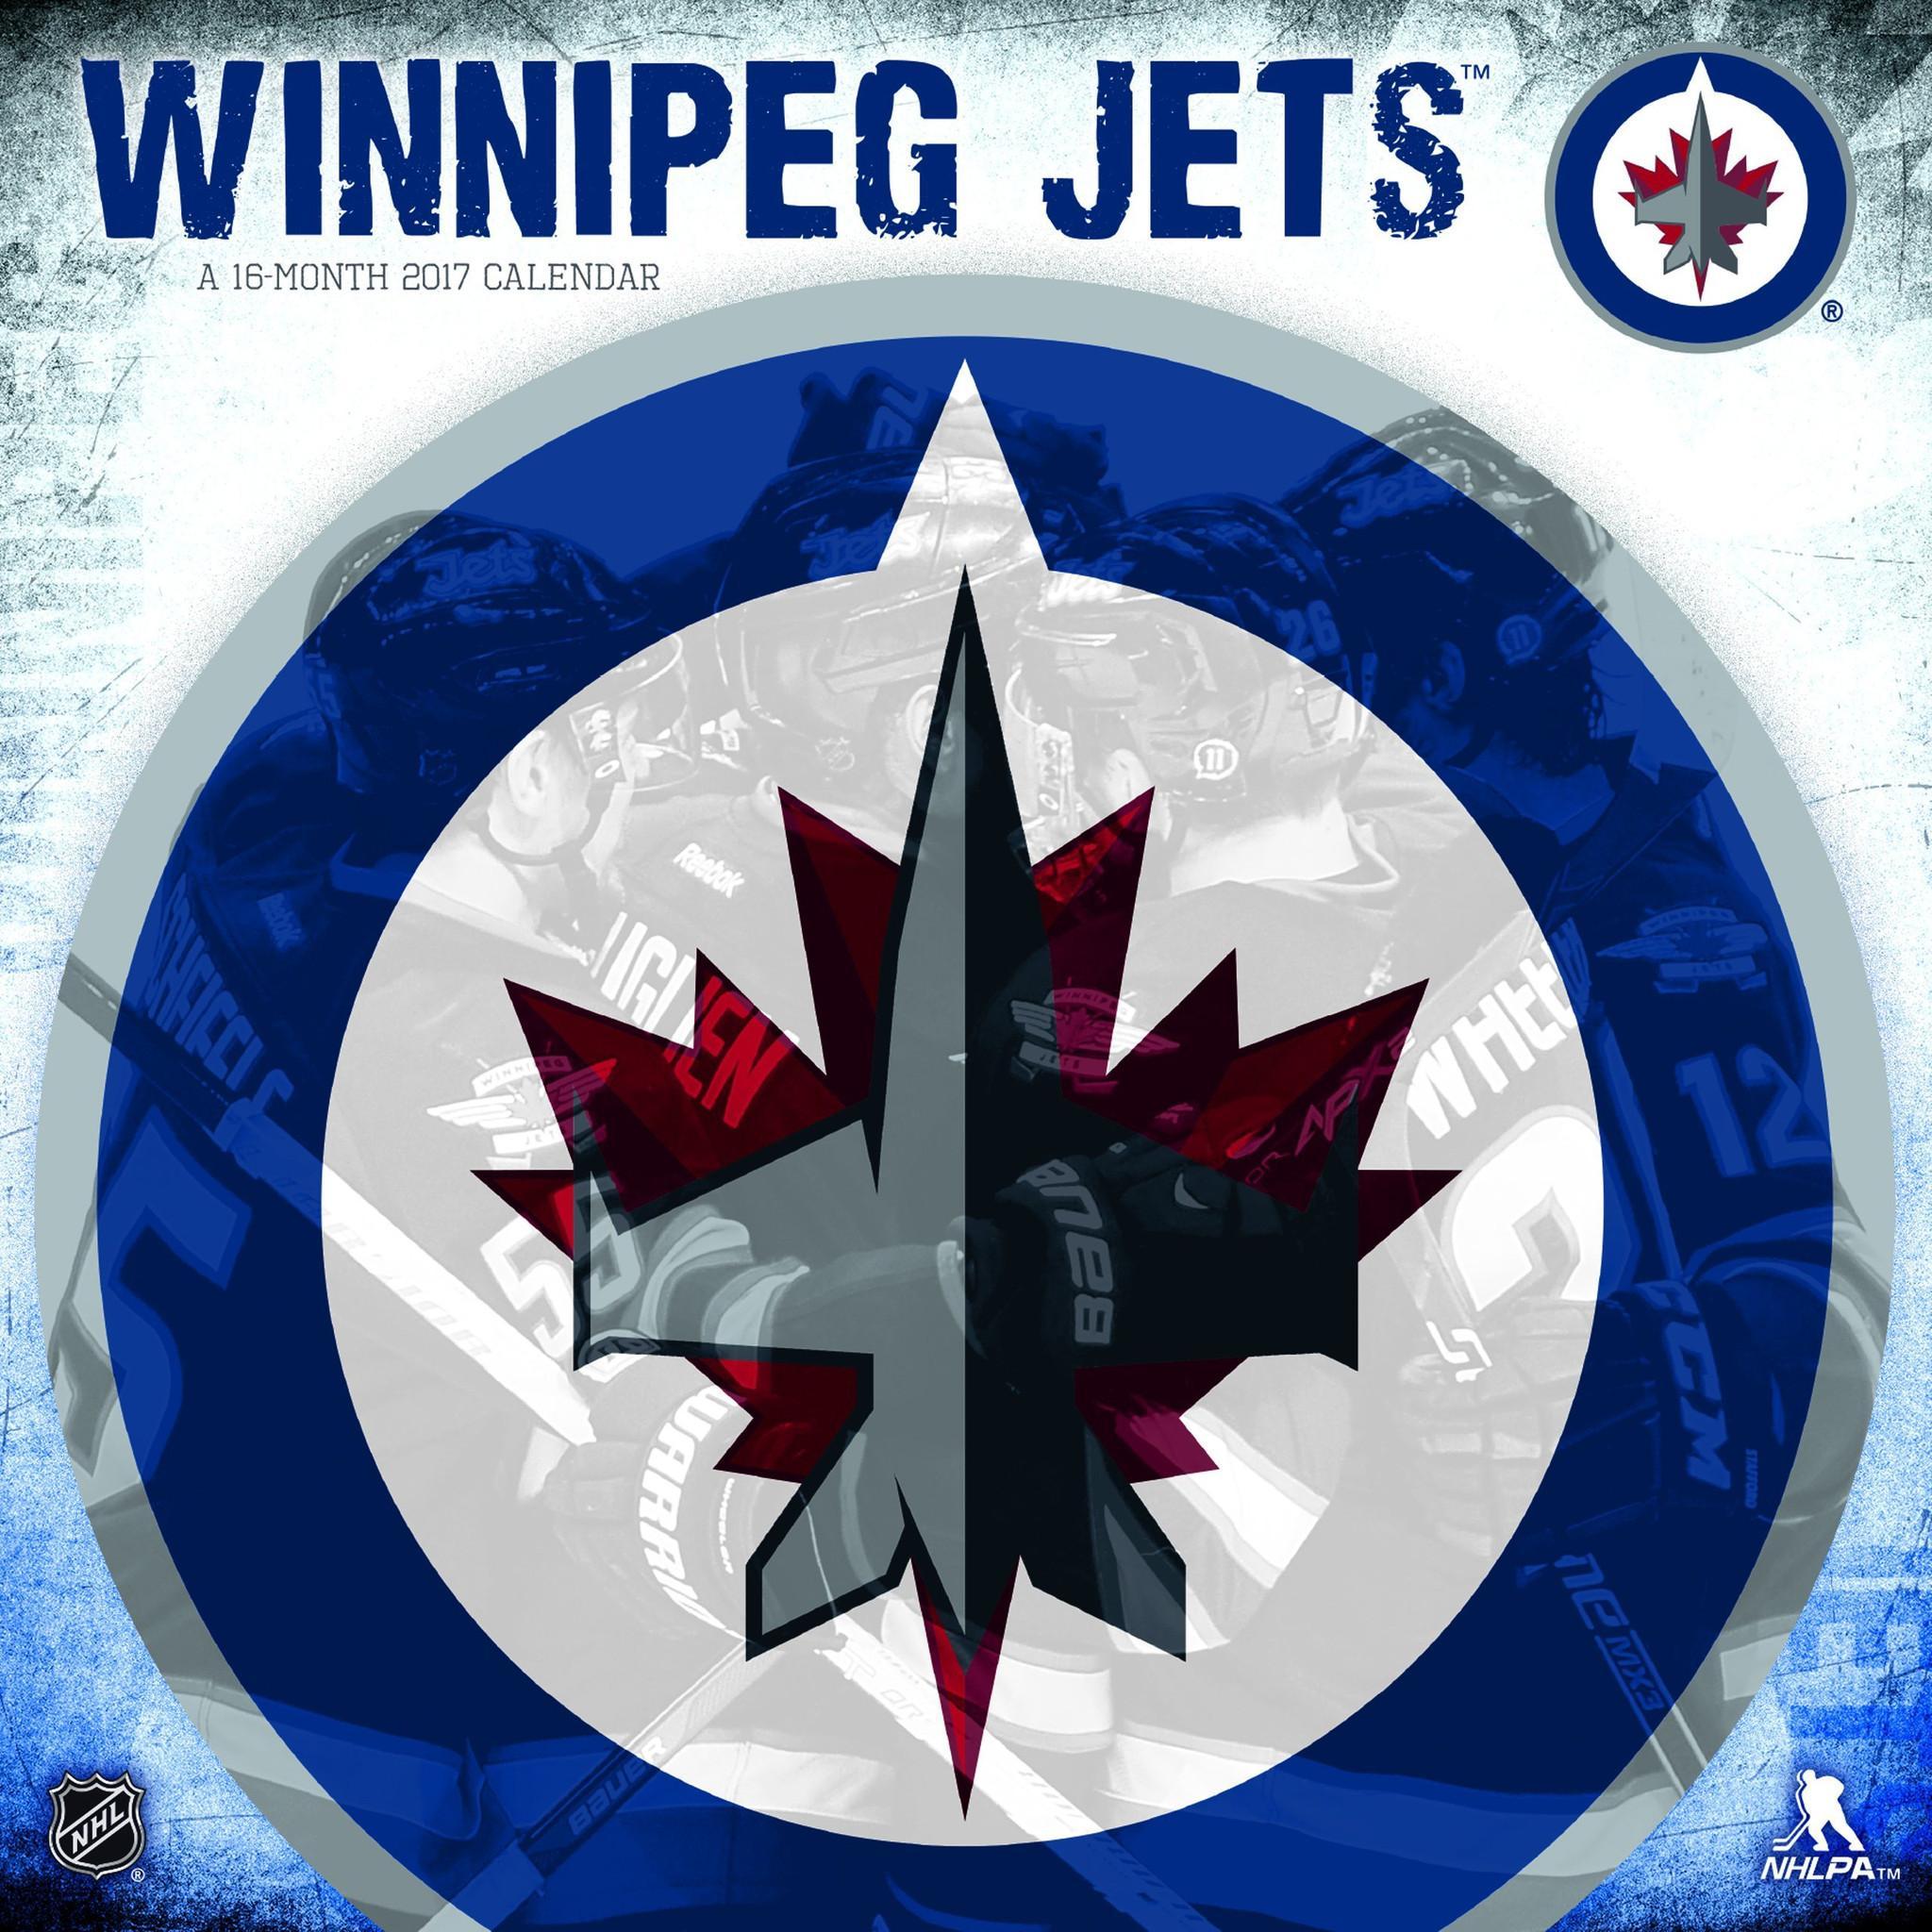 Winnipeg Jets Wallpaper. (37++ Wallpaper)